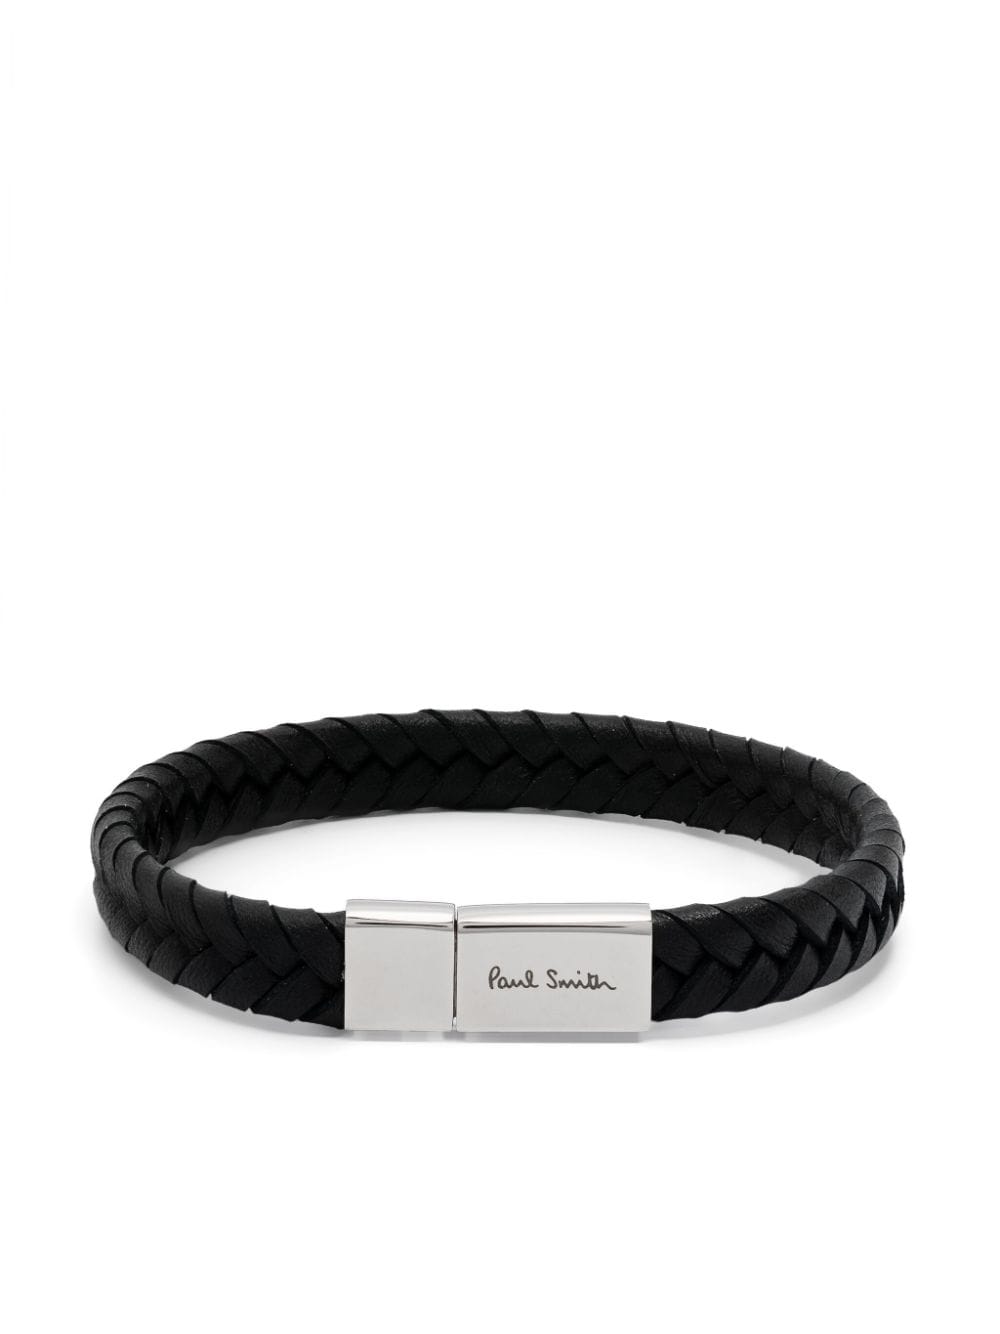 Paul Smith braided leather bracelet - Argento